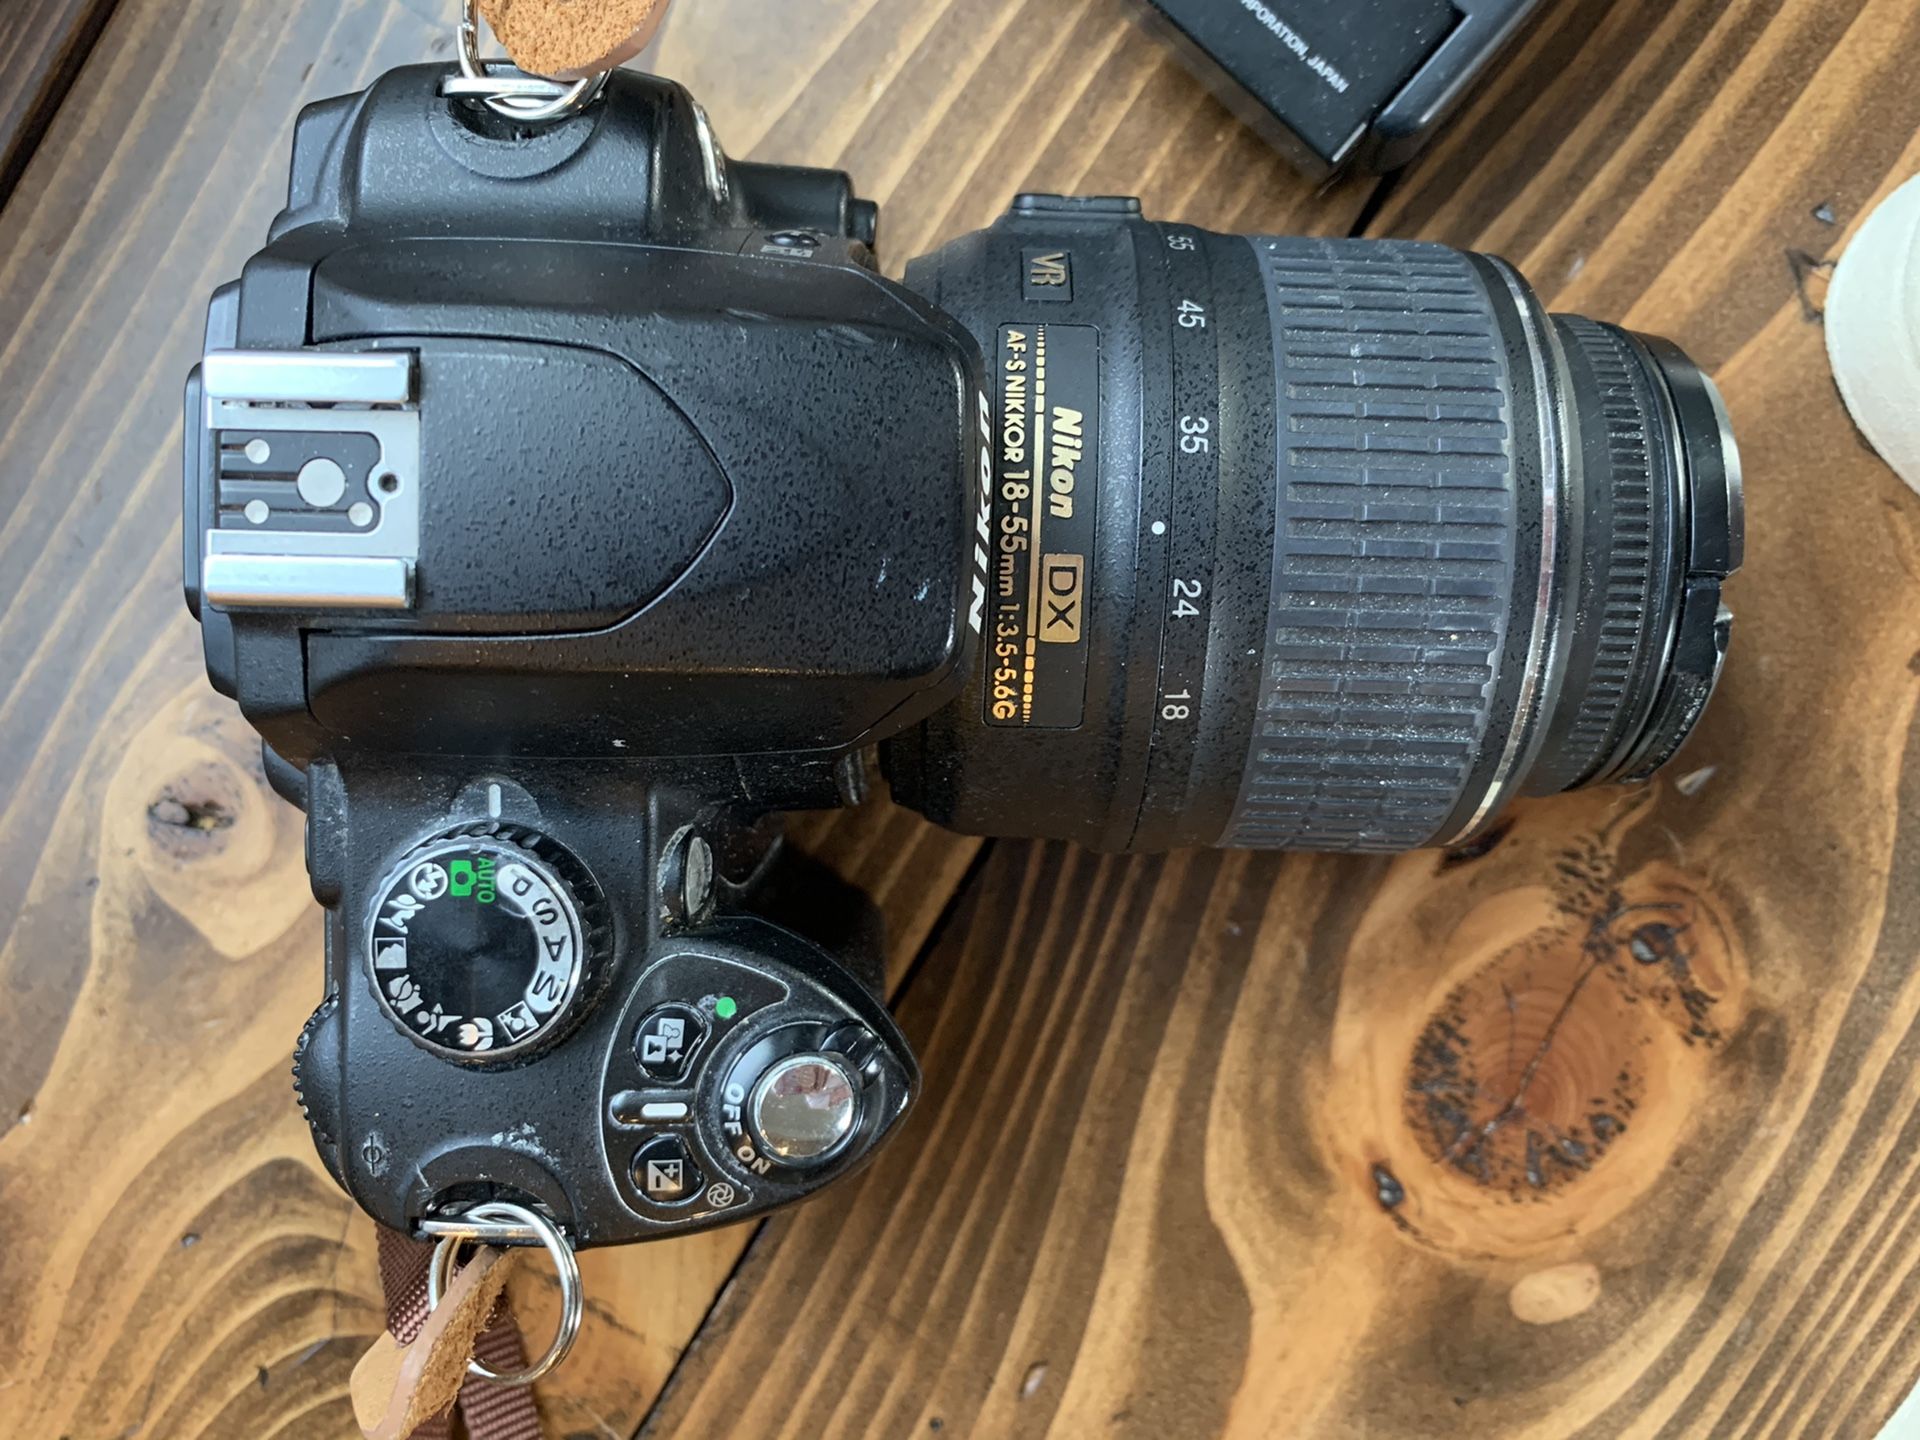 Nikon D60 Digital Camera with lens